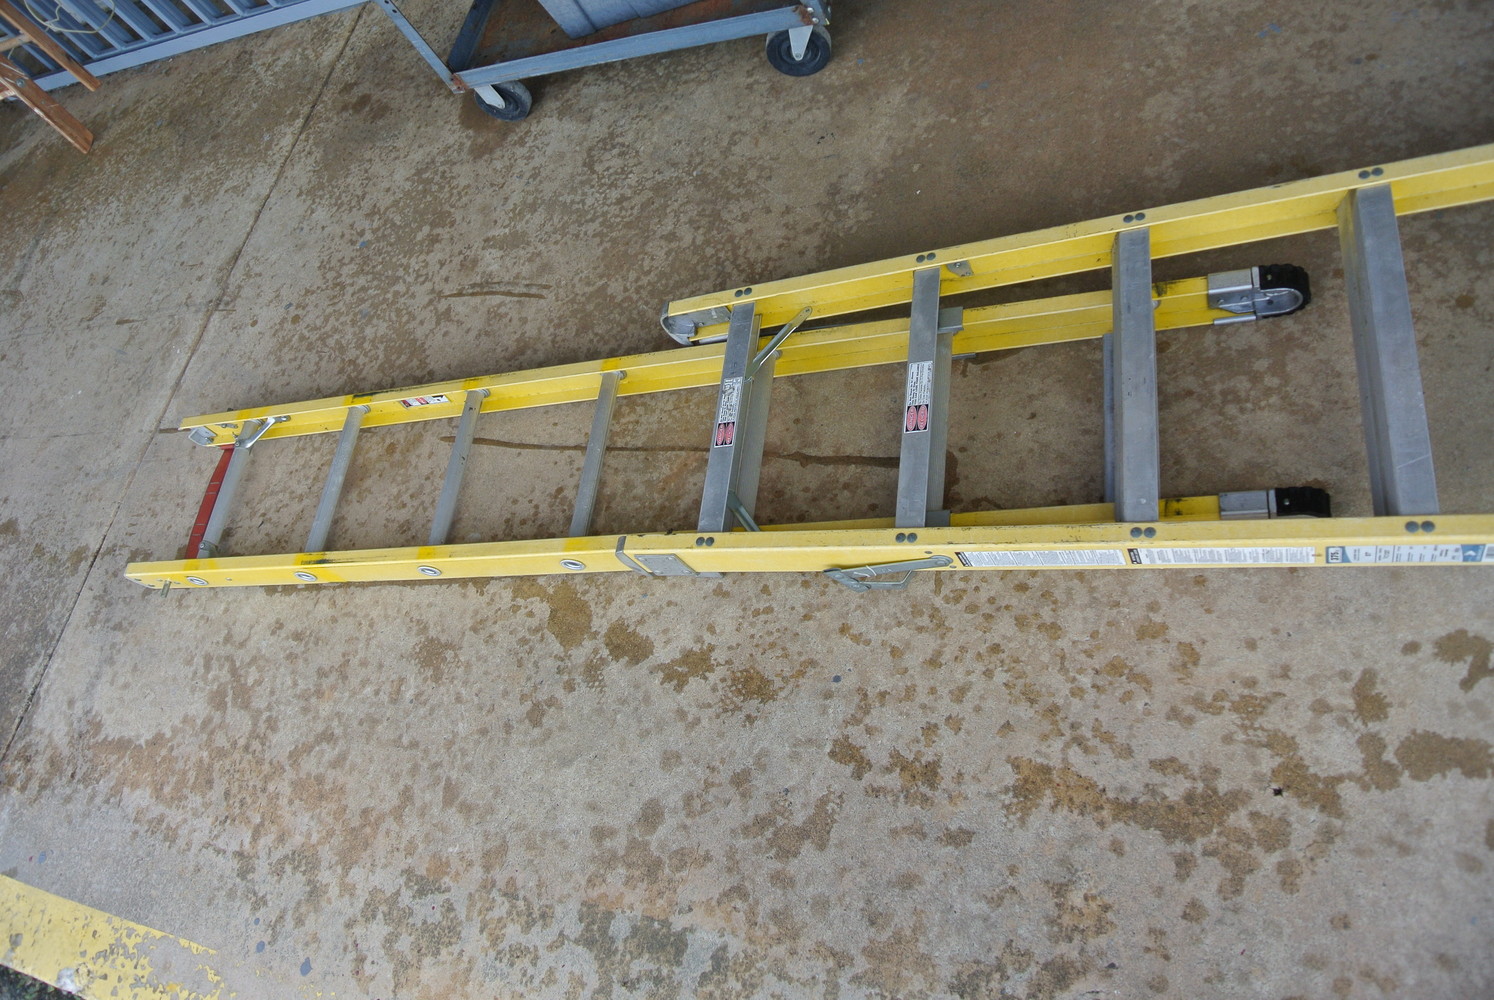 Louisville FC1207 Fiberglass Step to Straight Ladder 